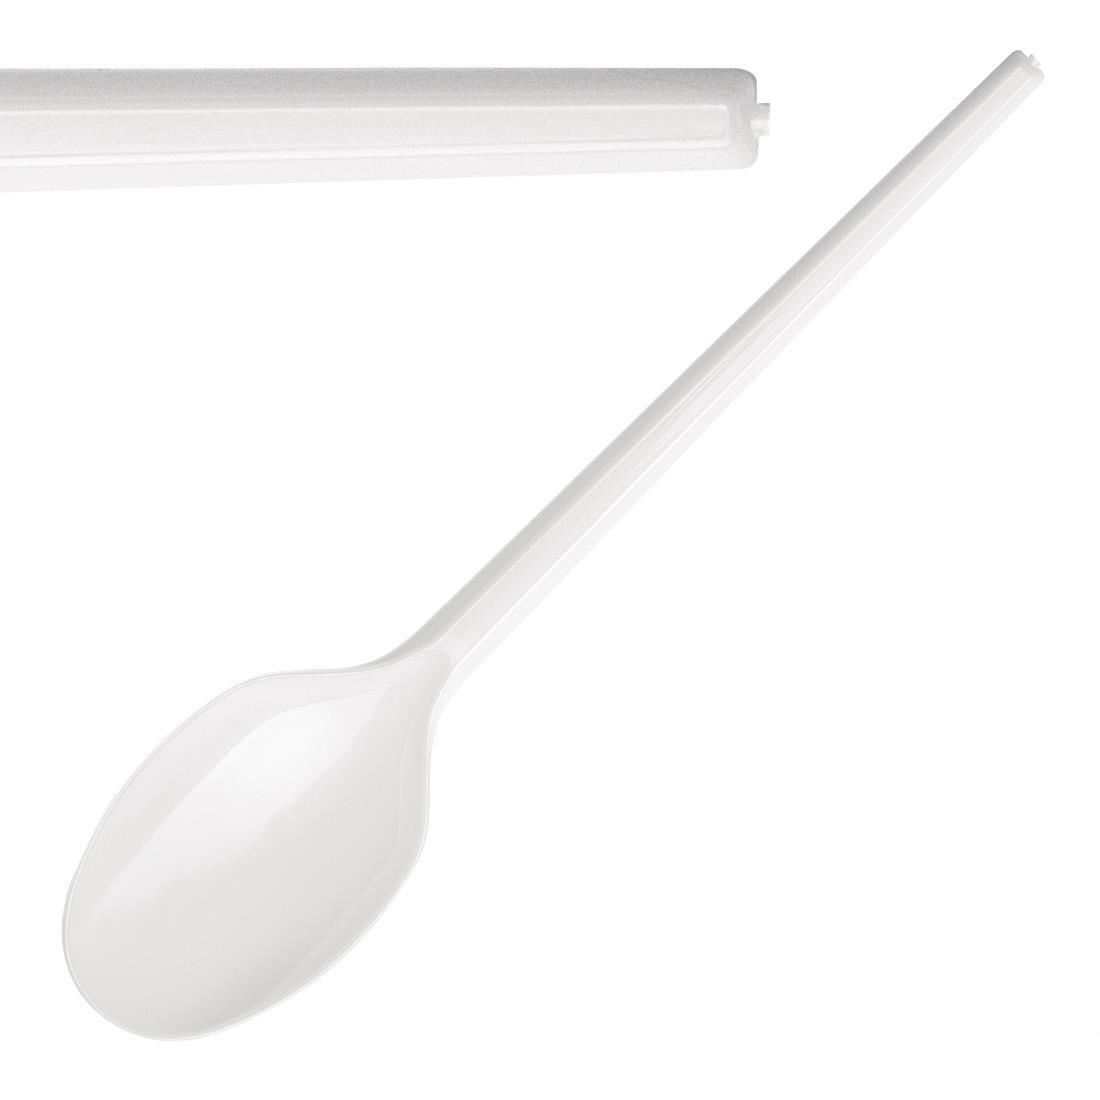 Fiesta Recyclable Lightweight Plastic Dessert Spoons White (Pack of 100) - U640  - 2